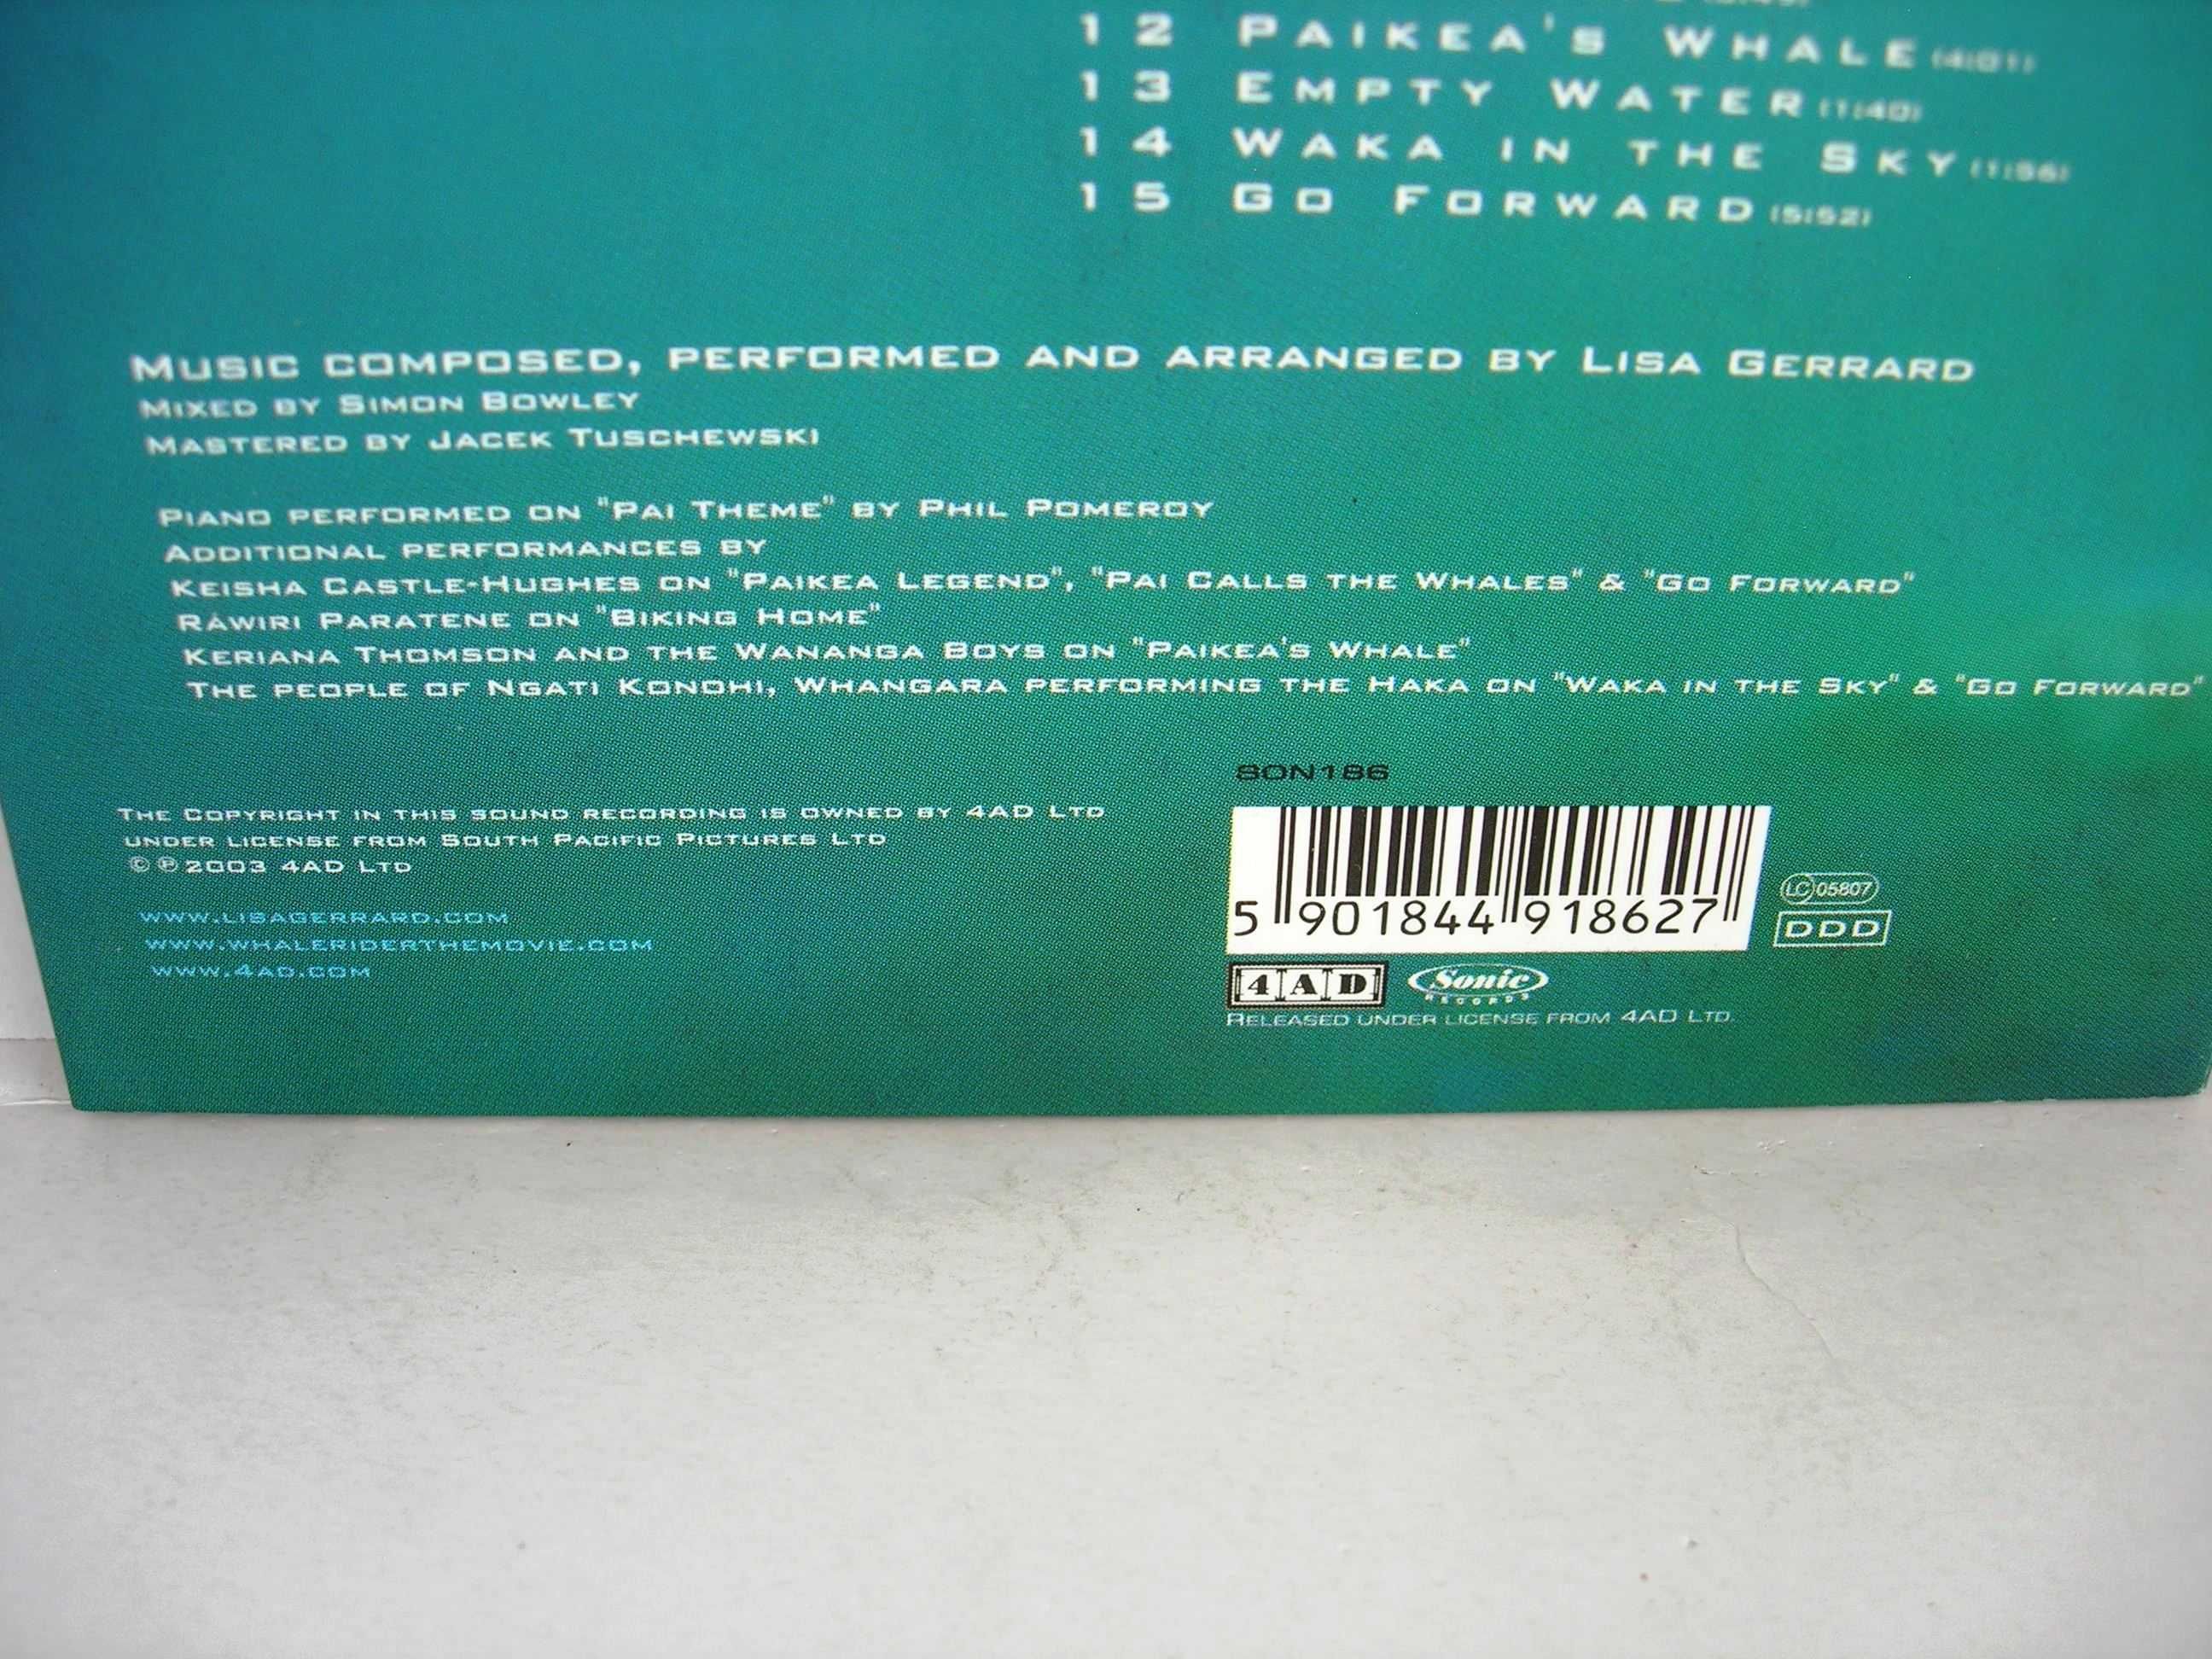 Lisa Gerard "Whalerider" CD 4AD Sonic Records 2003